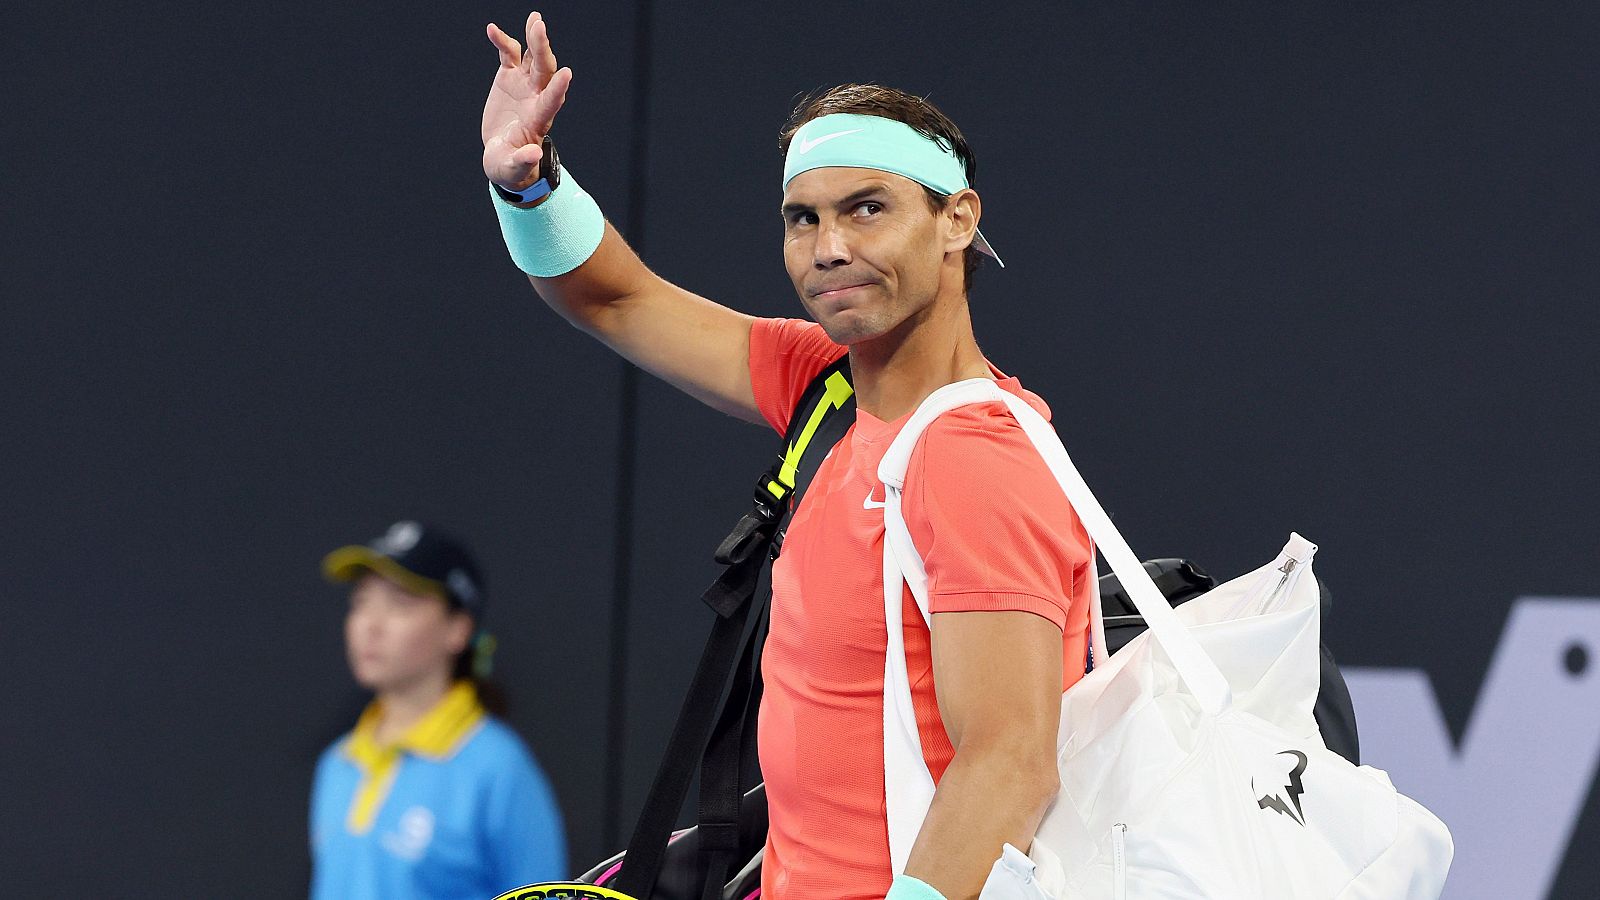 Rafa Nadal renuncia a jugar Indian Wells: "No me encuentro listo"